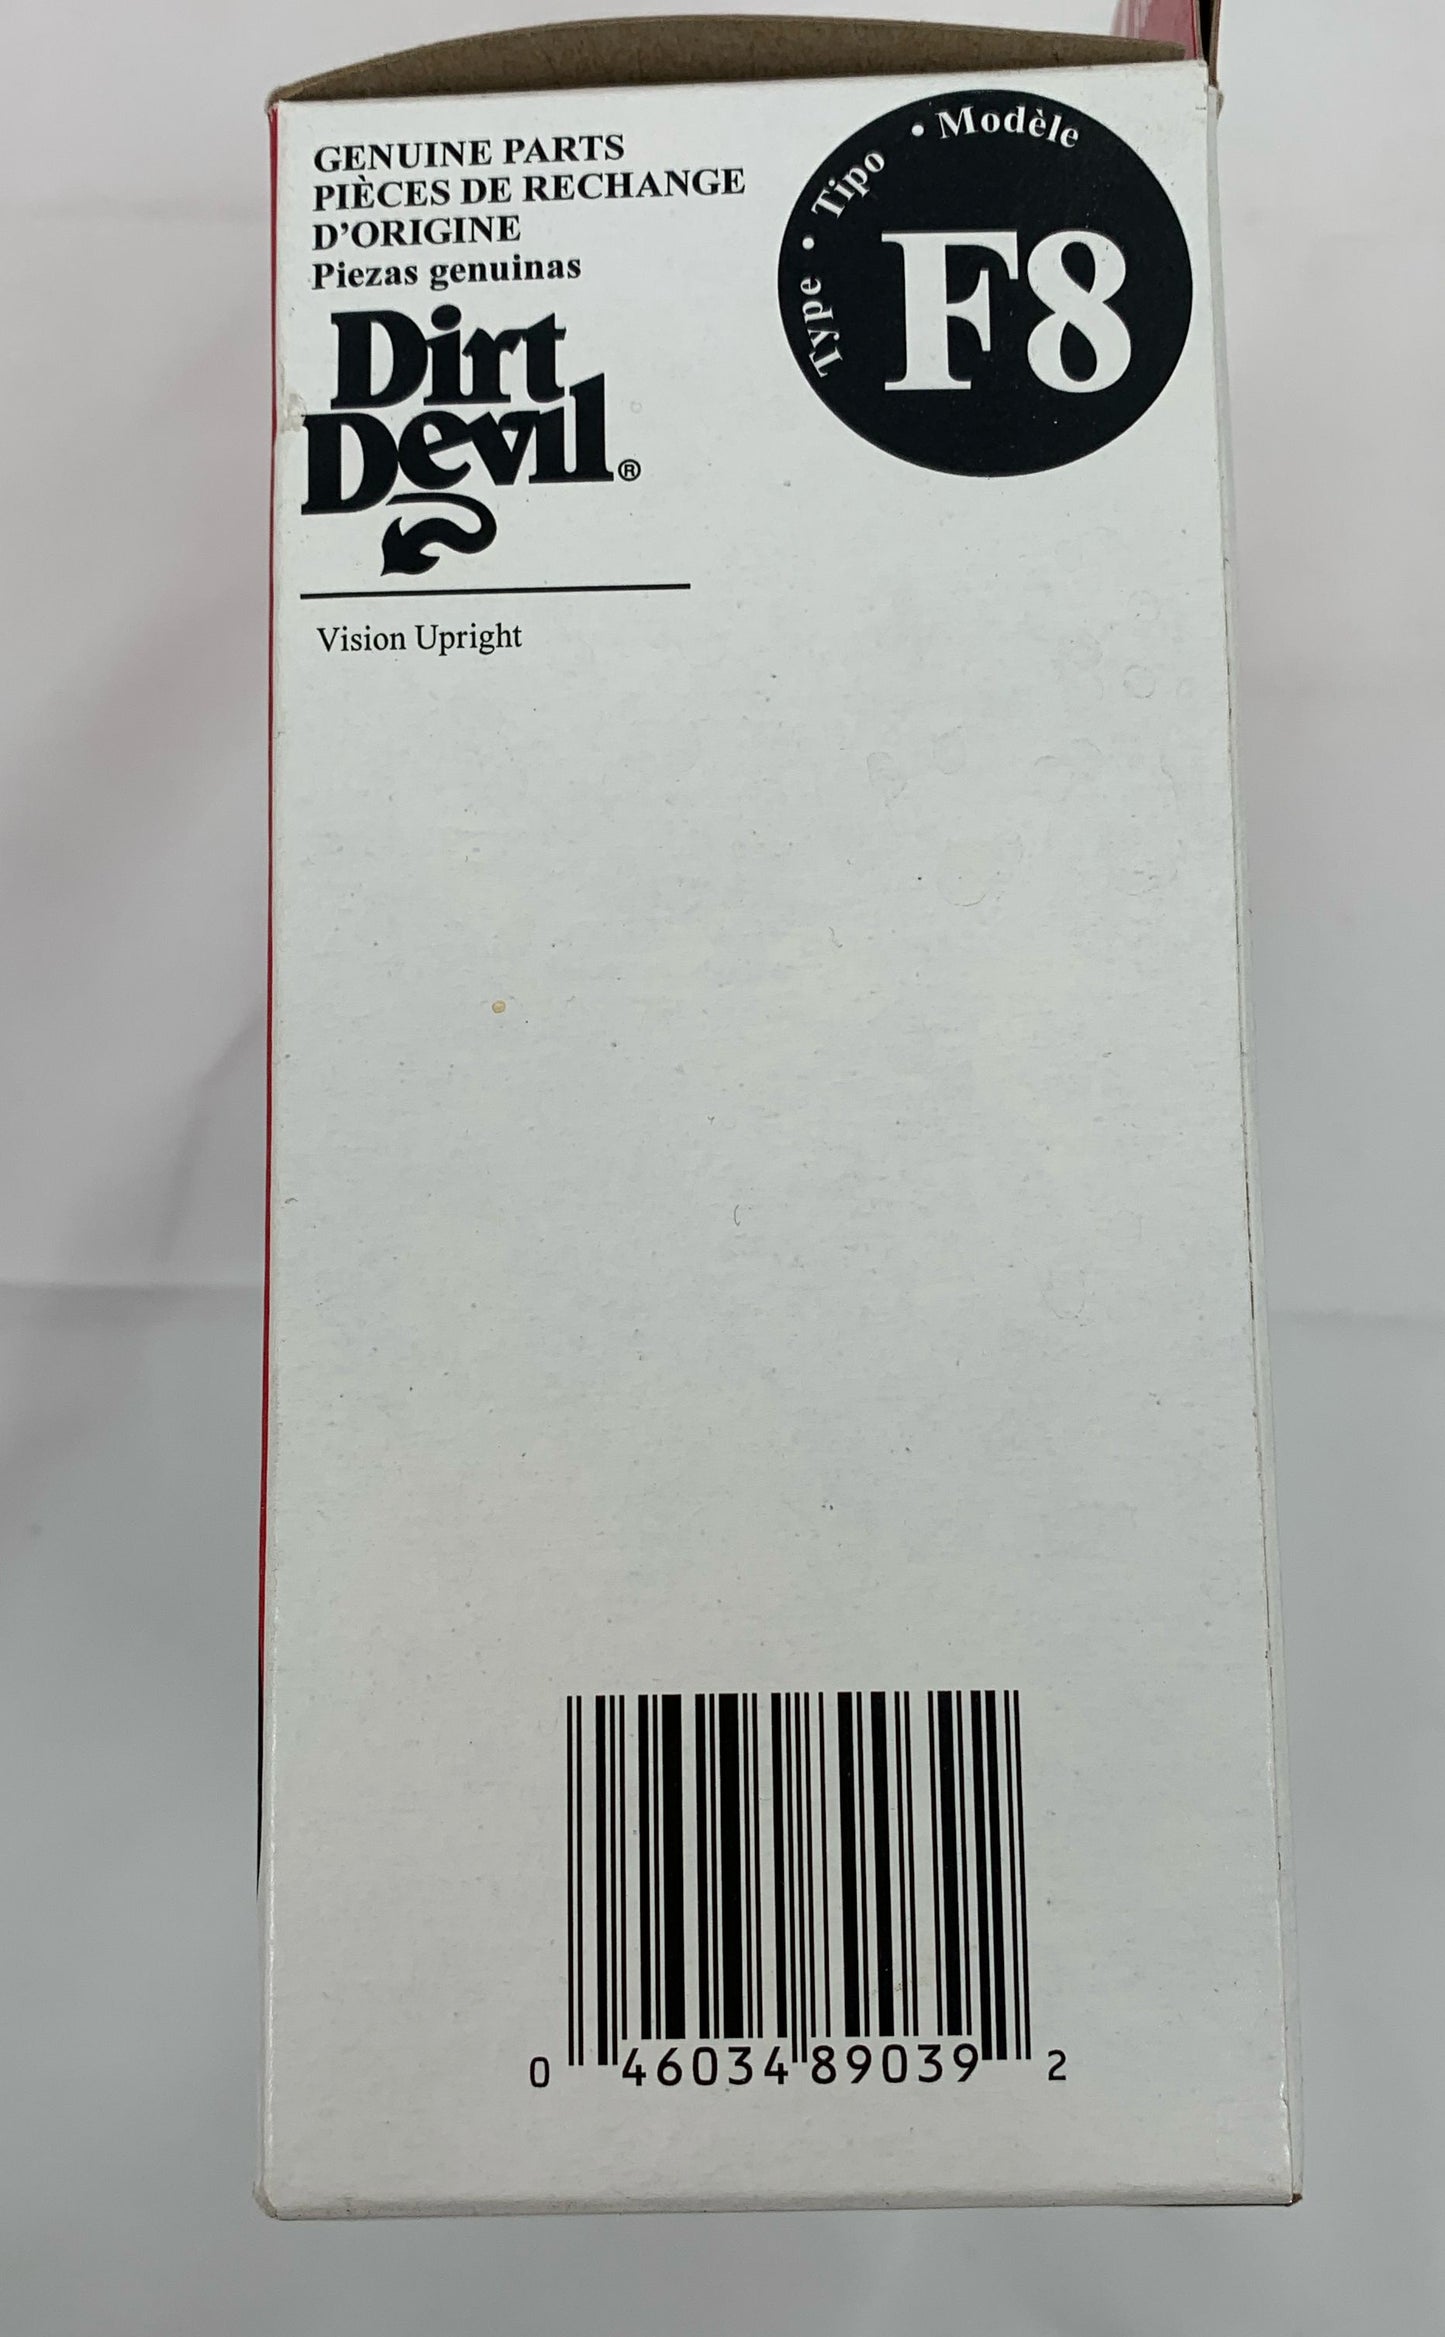 New Dirt Devil HEPA Media Filter Type F8 For Vision Upright